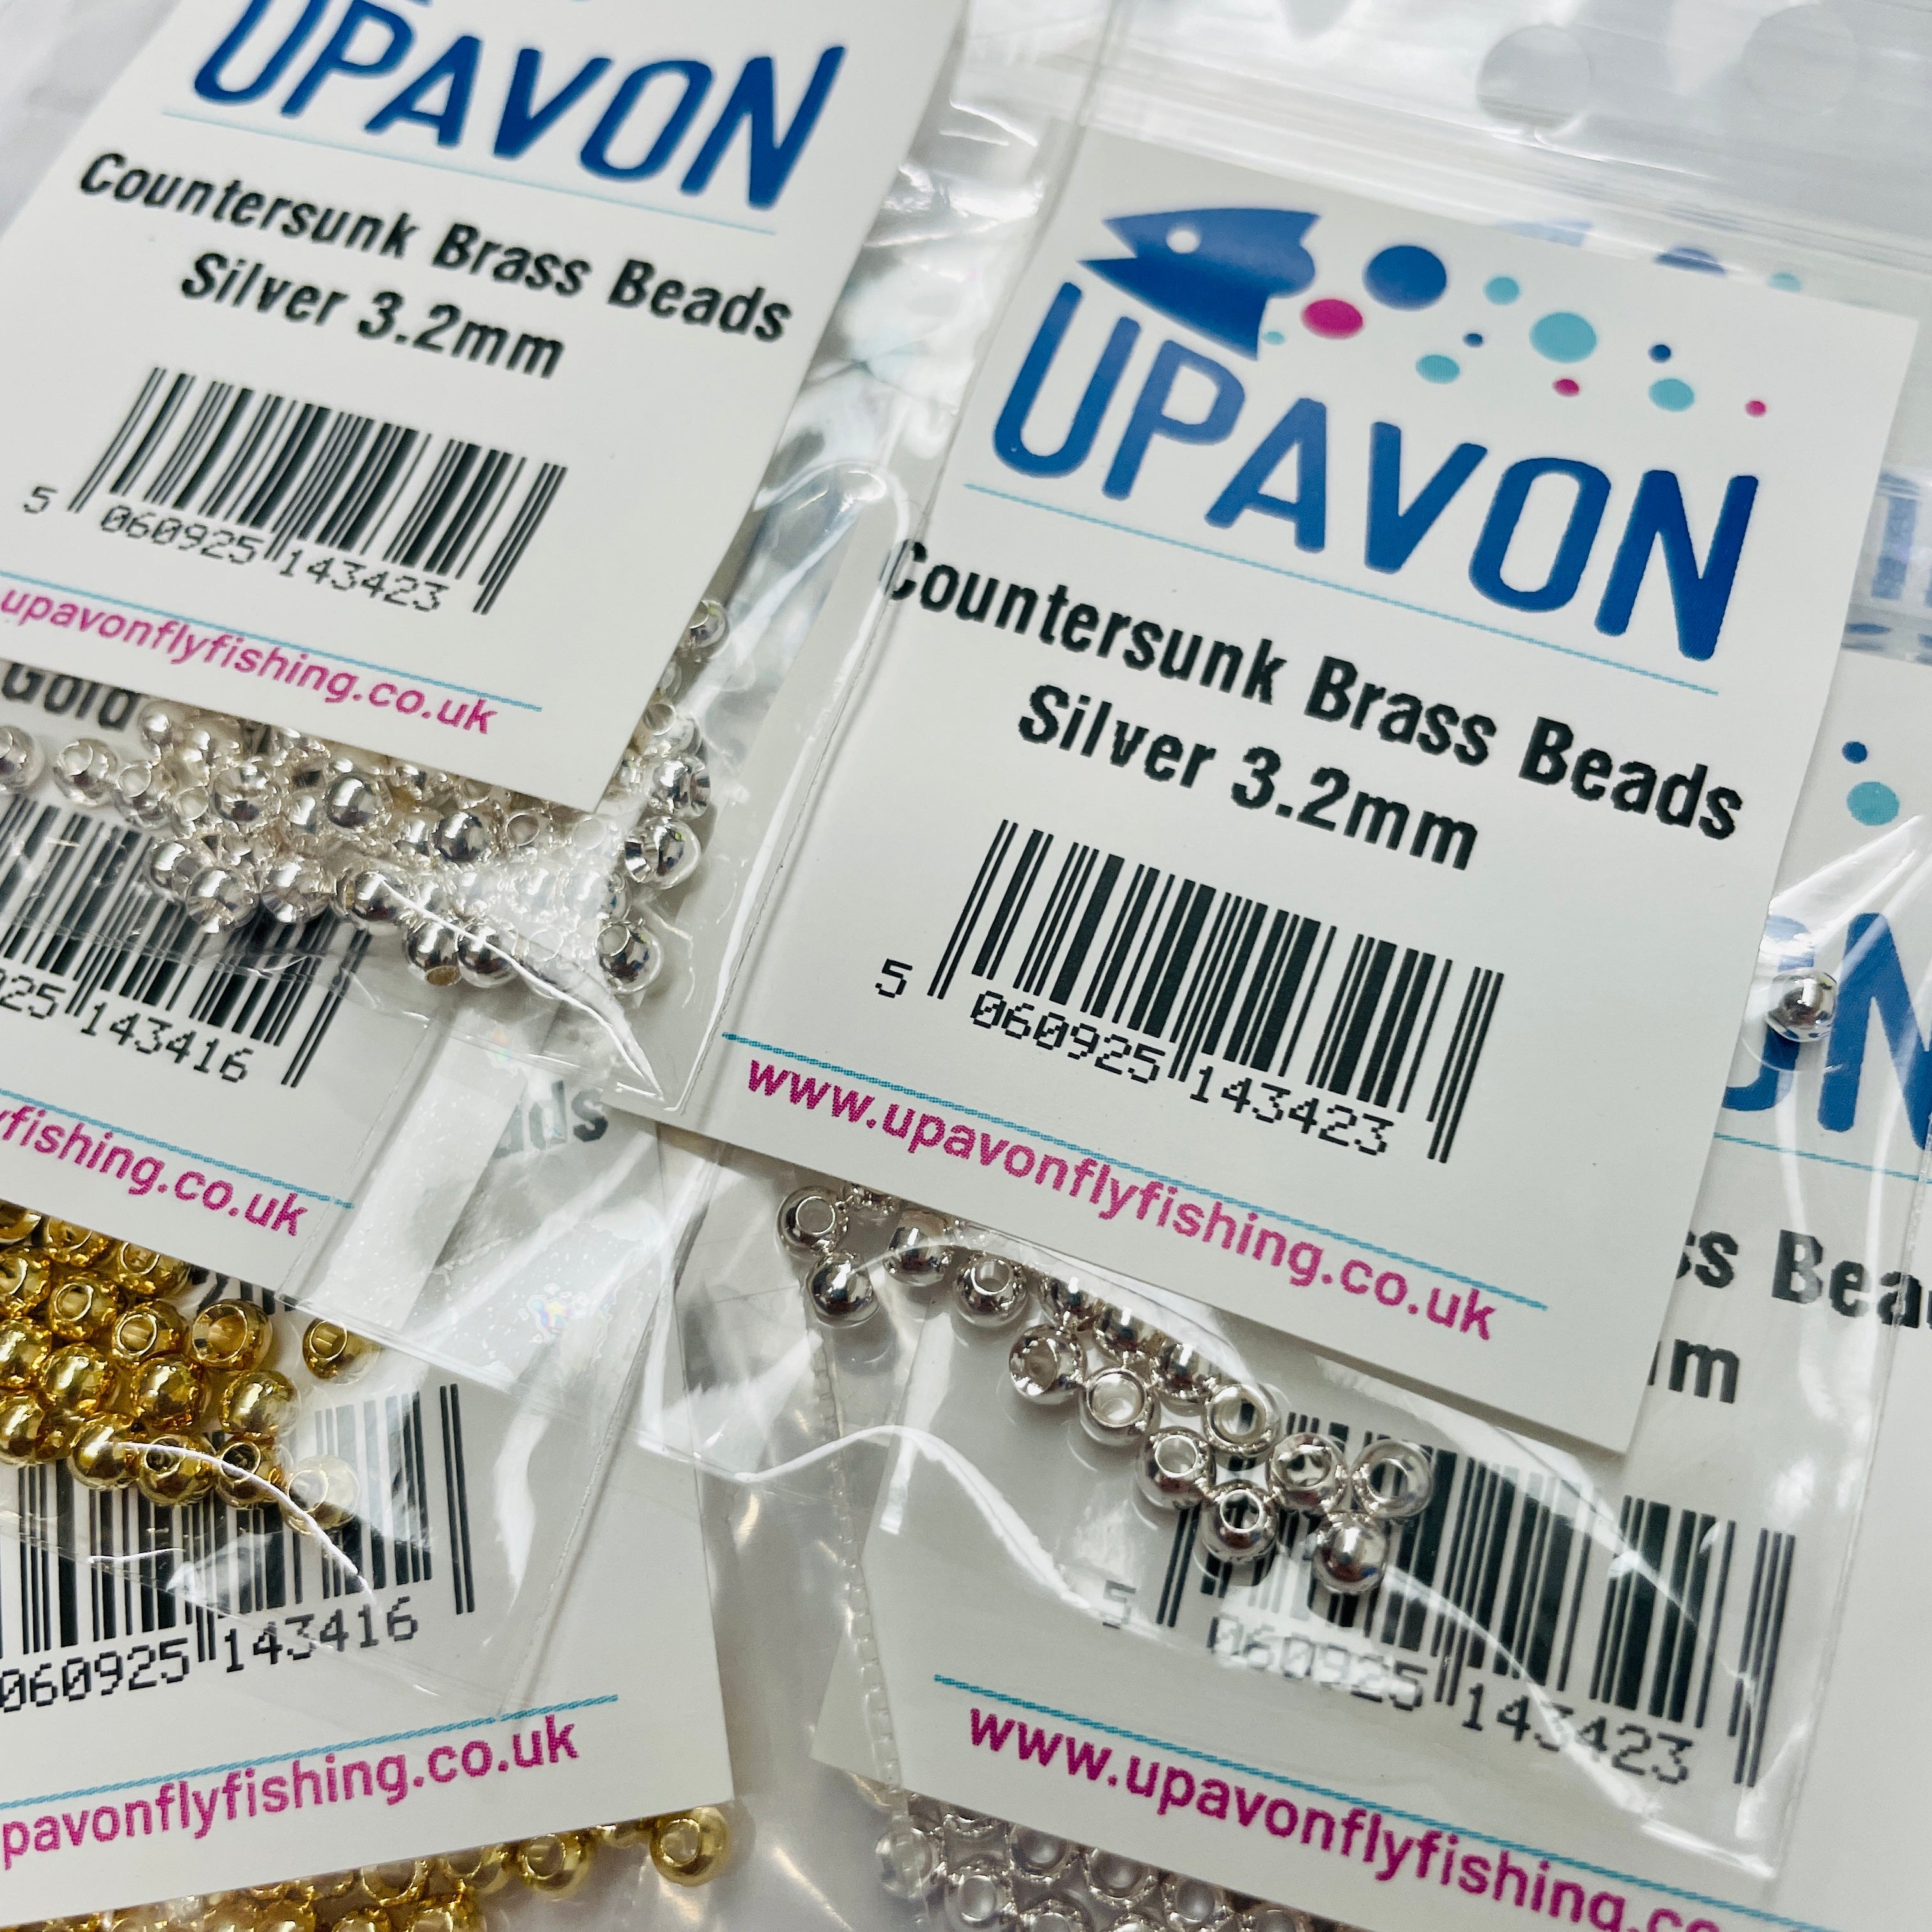 Upavon Countersunk Metallic Brass Beads (50pcs) - Upavon Fly Fishing